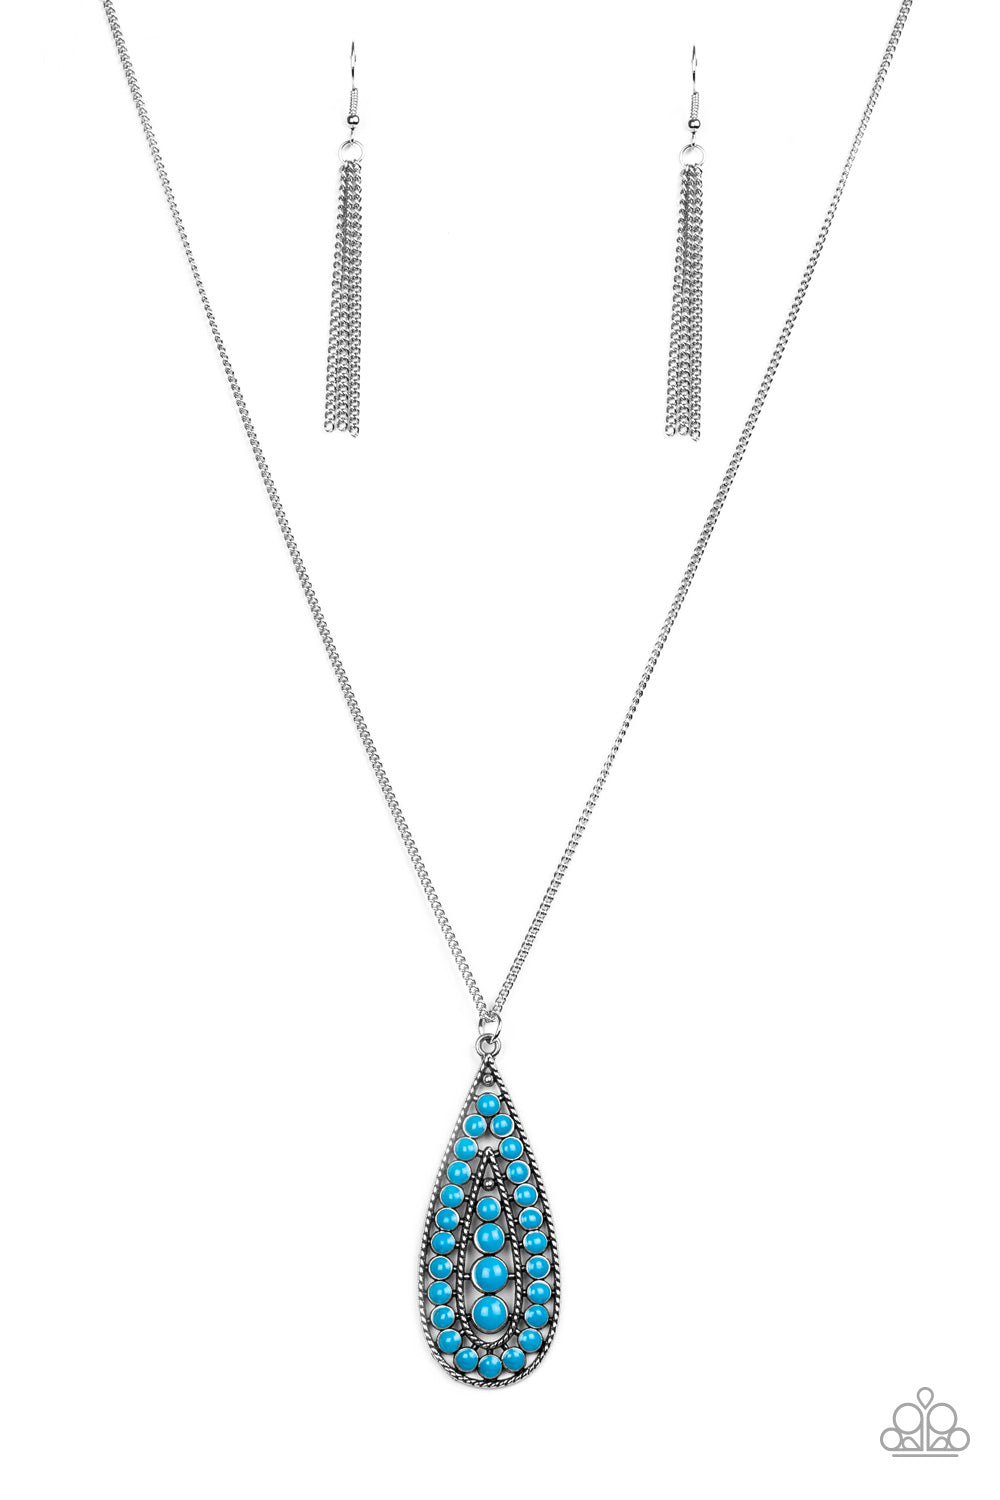 Tiki Tease - Blue Necklace freeshipping - JewLz4u Gemstone Gallery